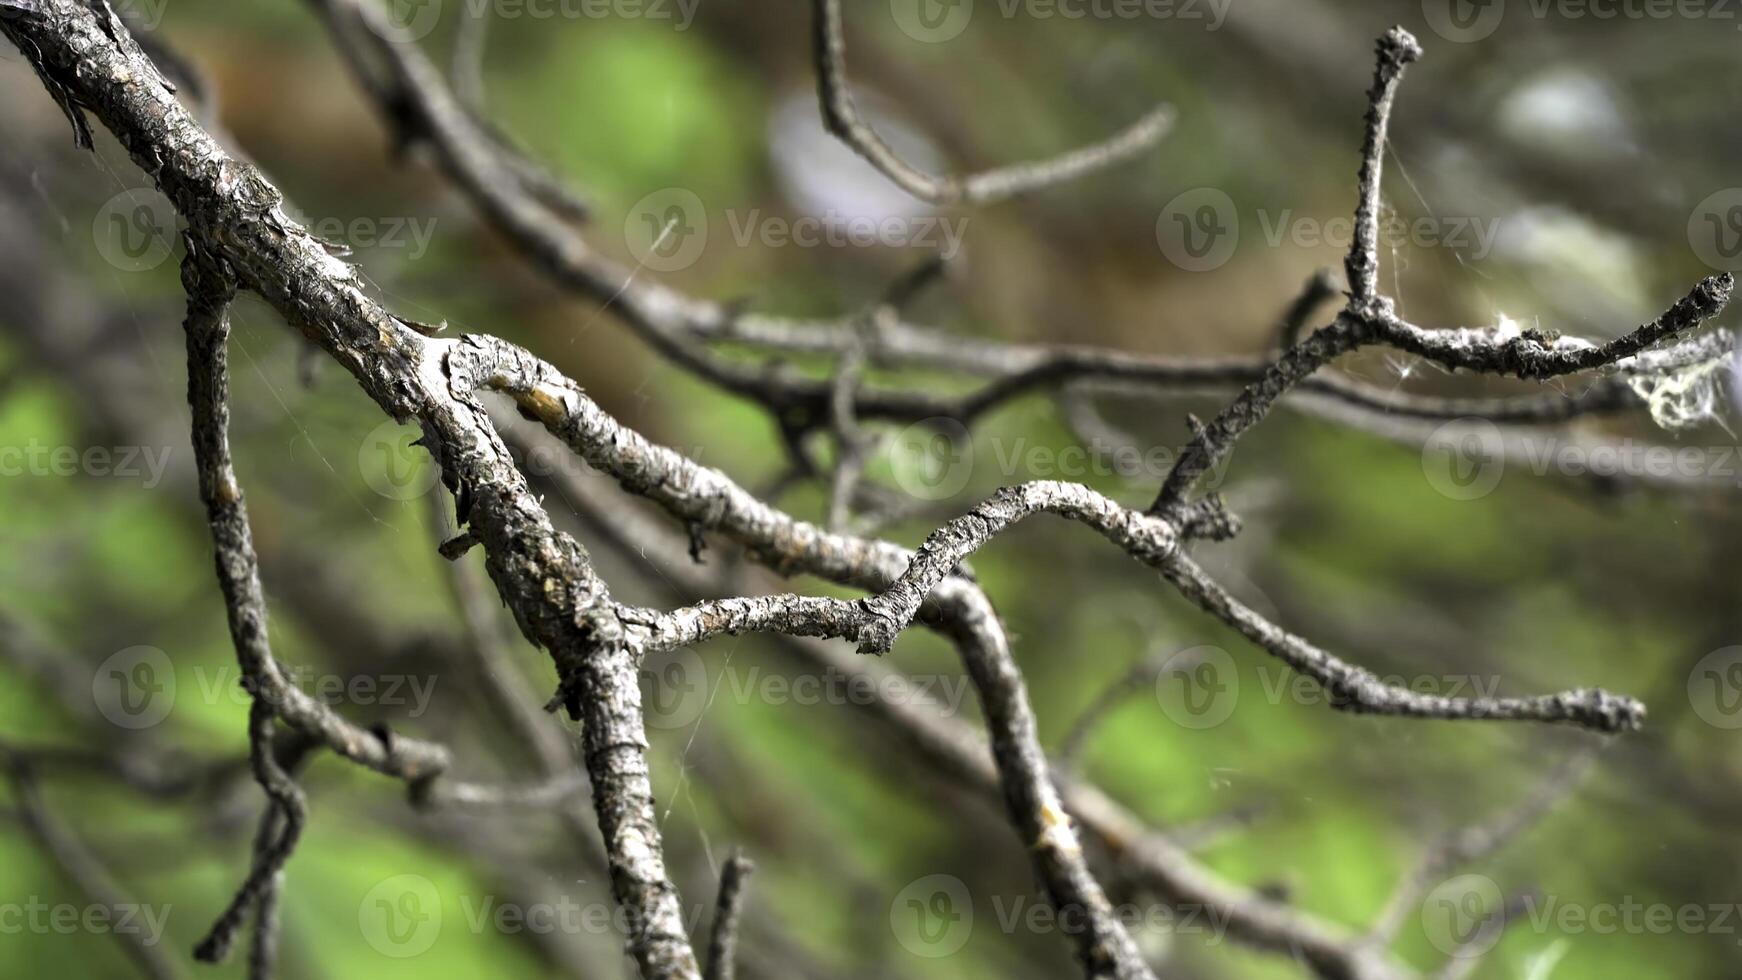 cerca arriba para rama de un calvo árbol en borroso verde fondo, otoño naturaleza concepto. valores imágenes. desnudo árbol rama balanceo en el viento. foto